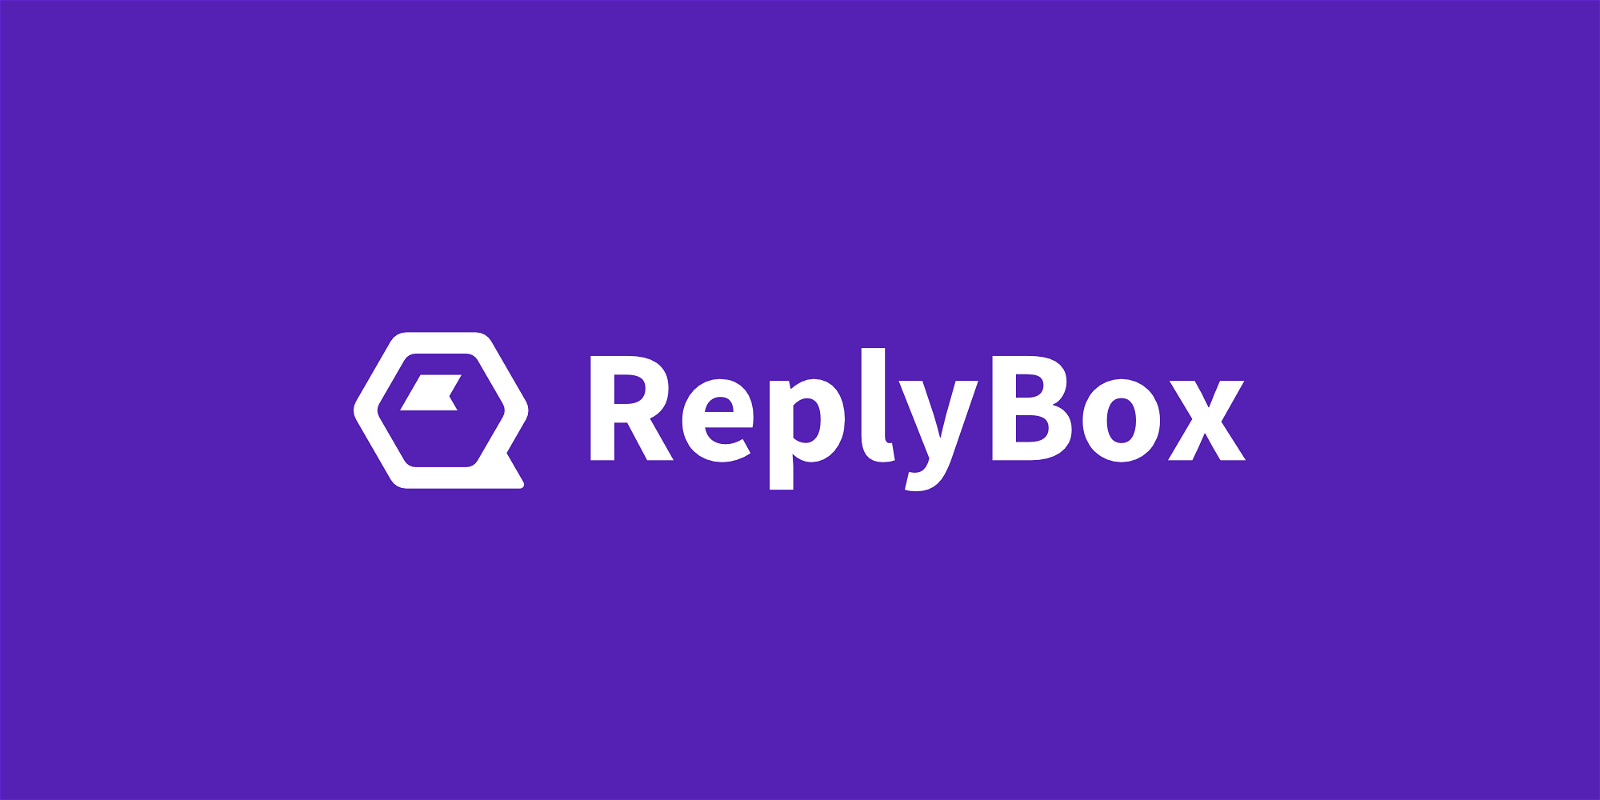 ReplyBox